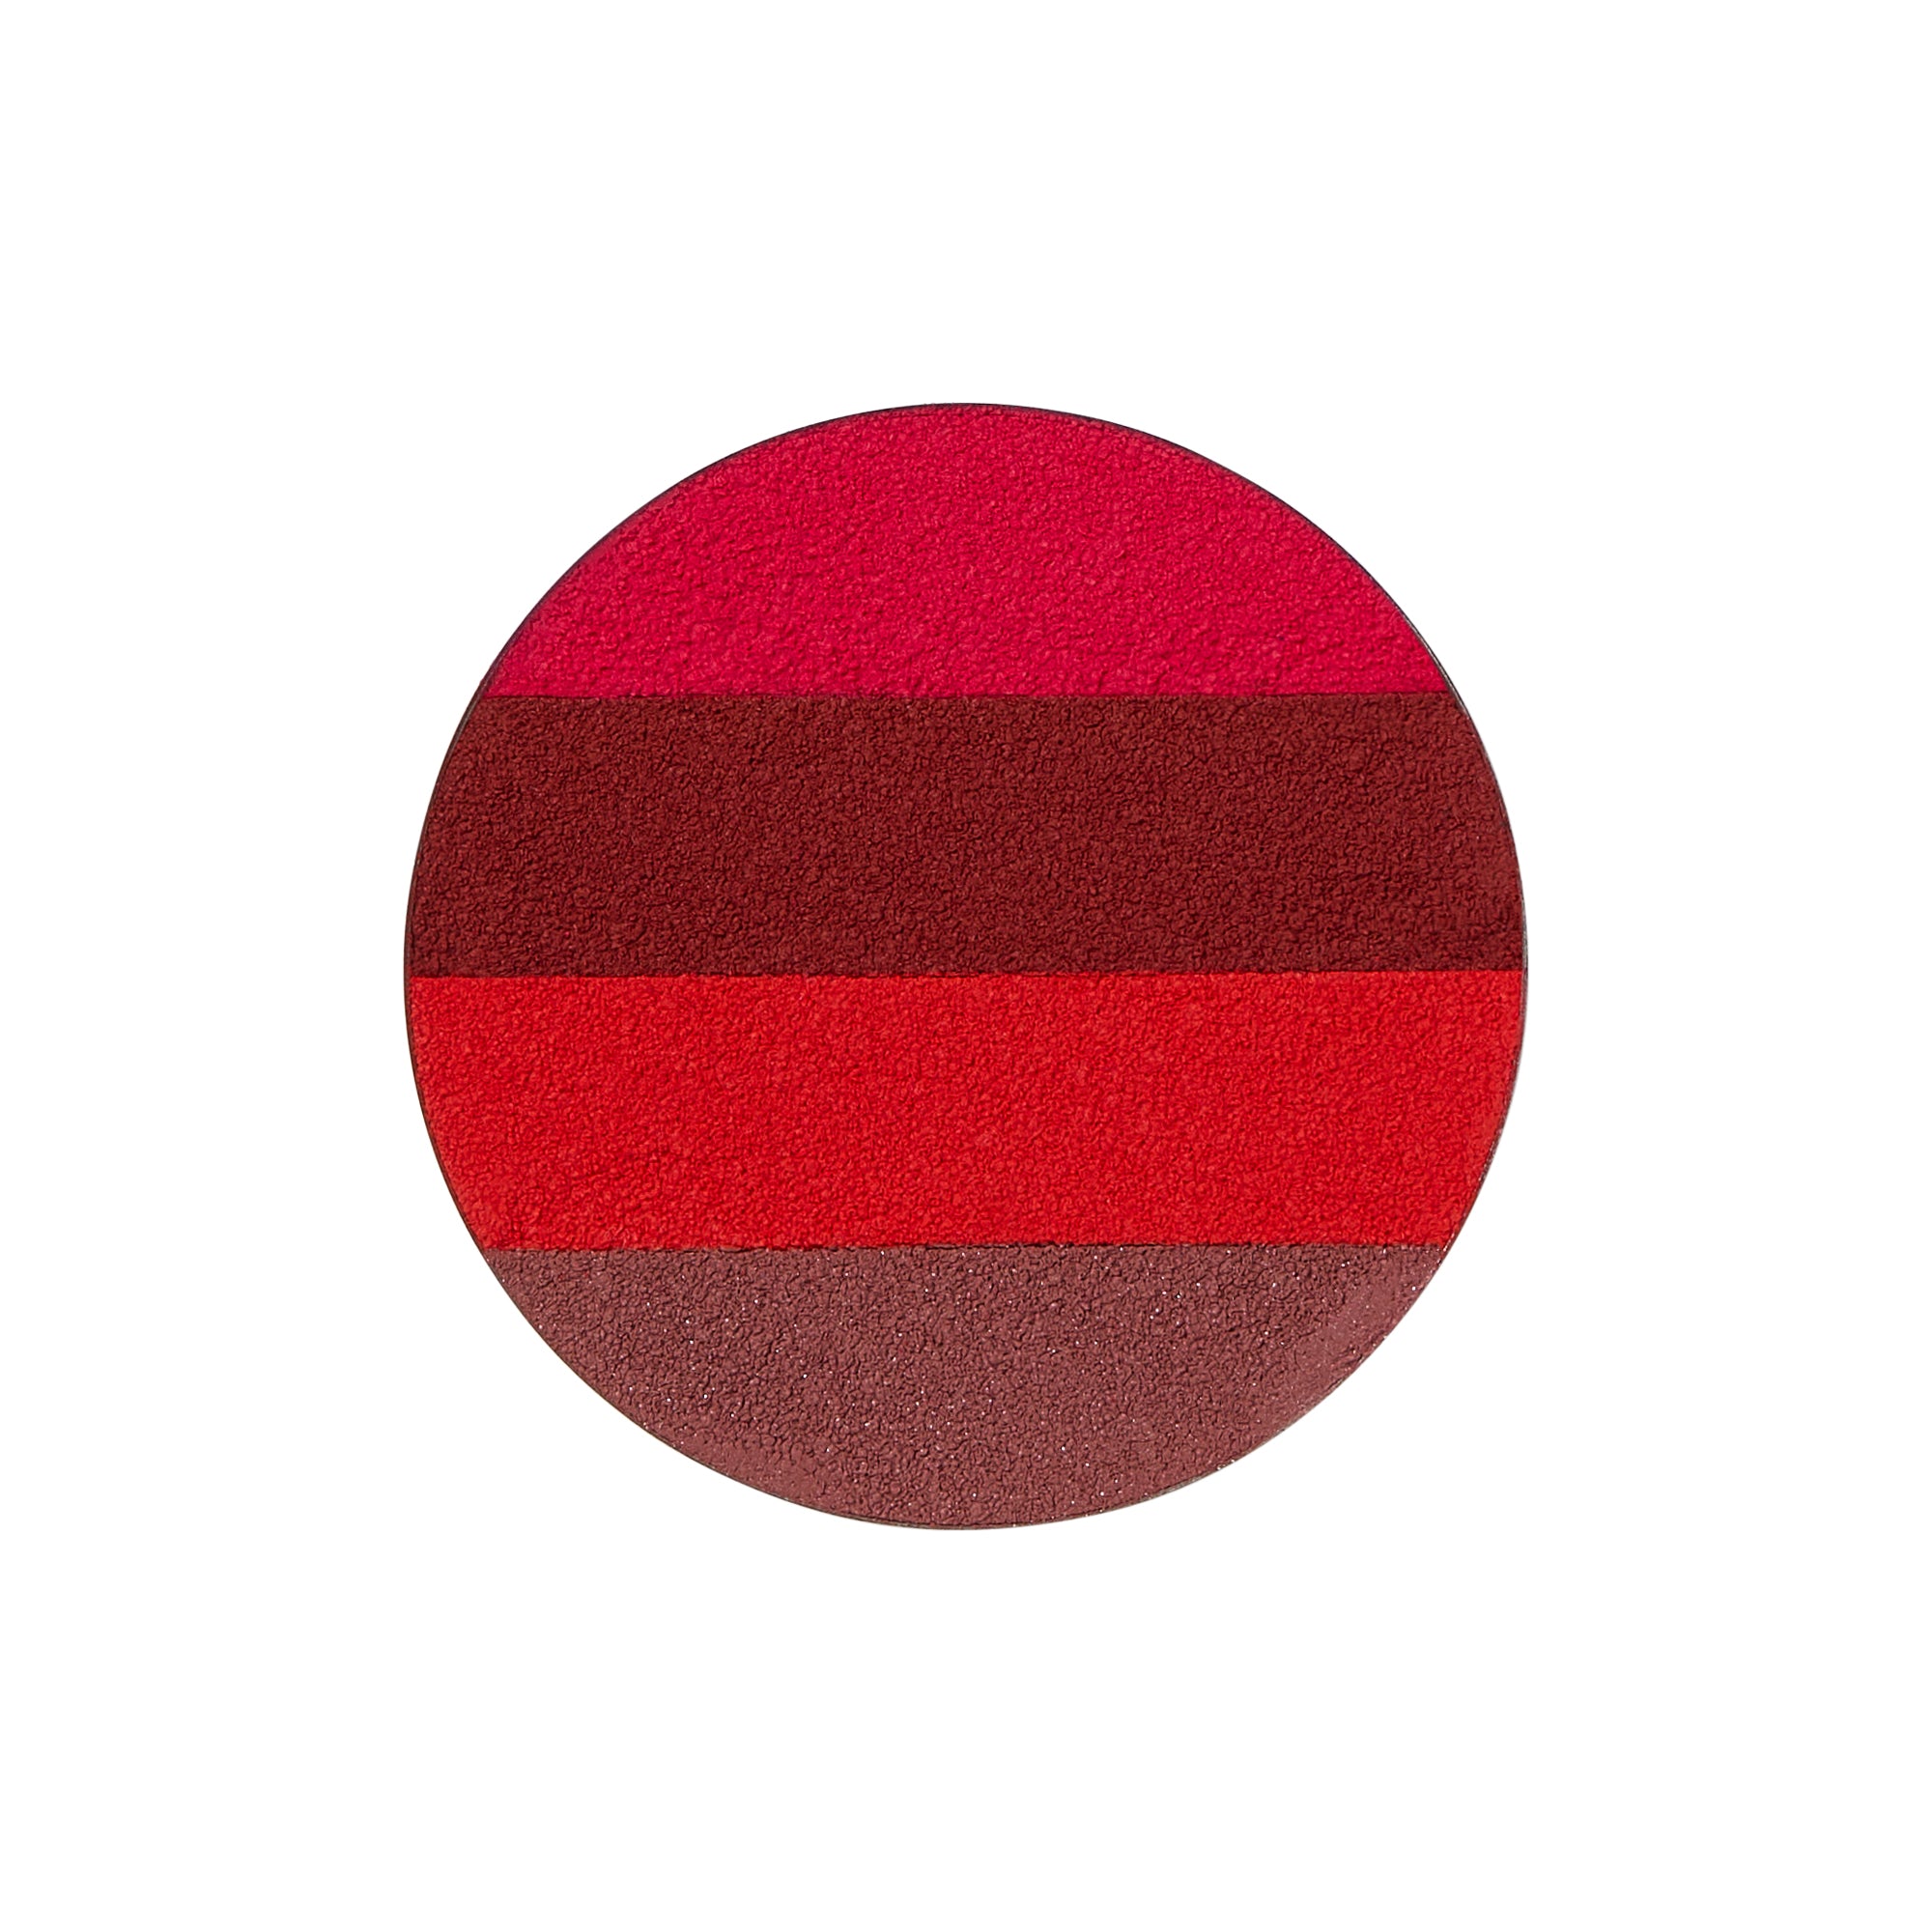 Westman Atelier Lip Suede: Les Rouges, Lip Palette Refill In White